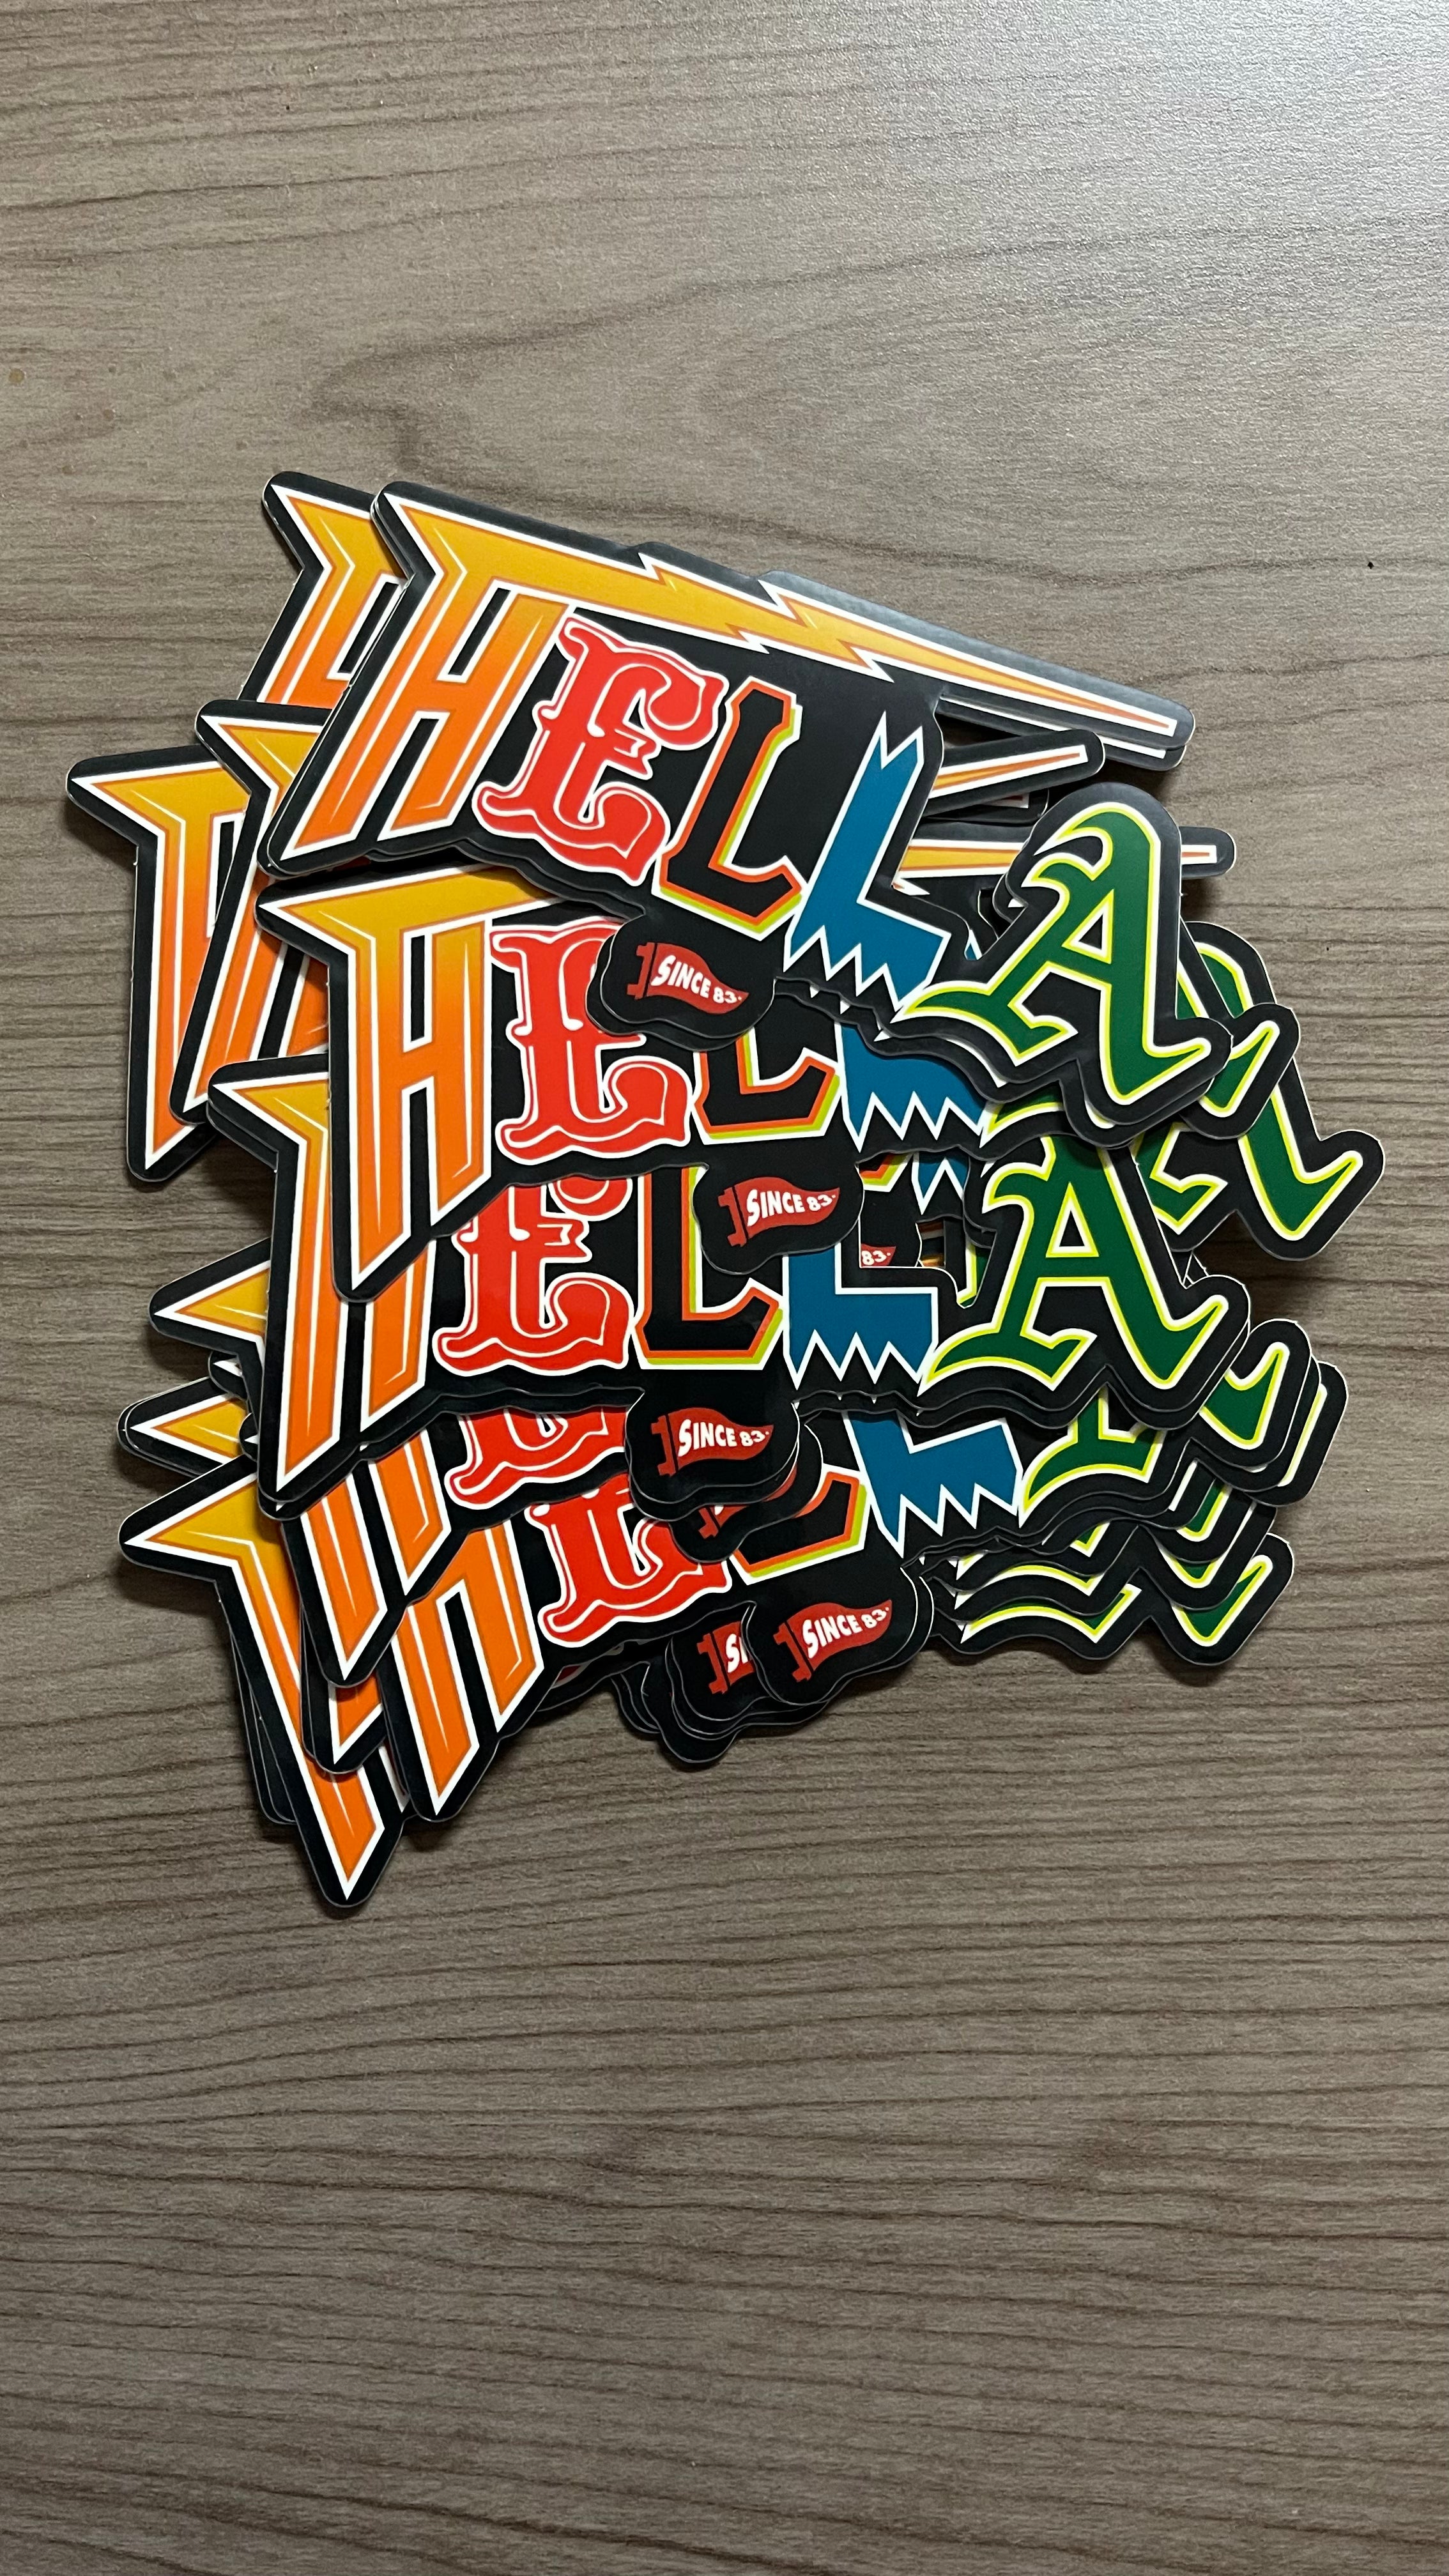 Hella | Vinyl Sticker